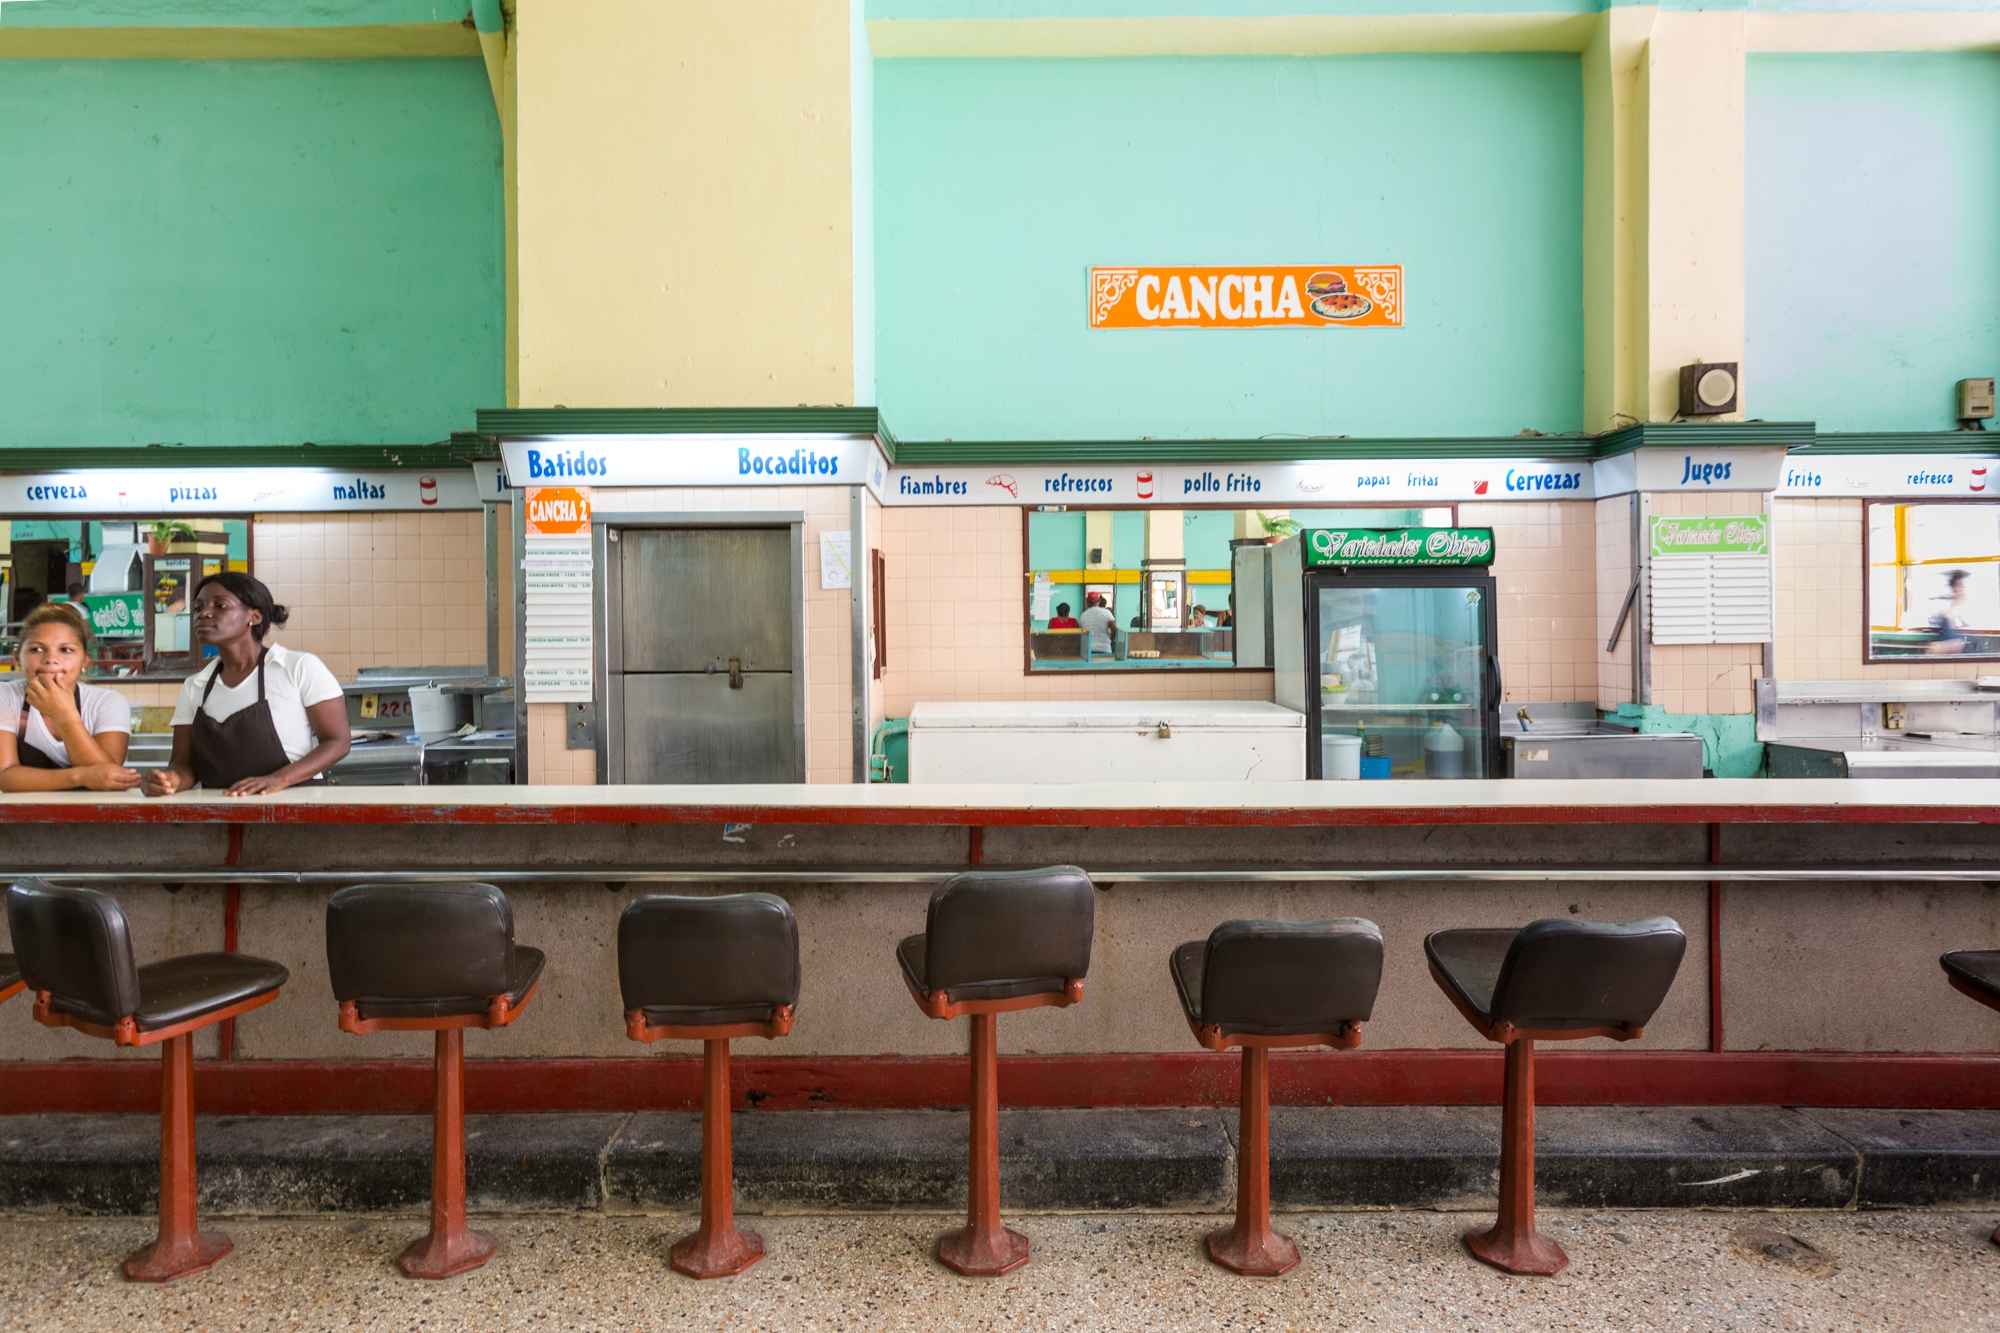 Photographing Cuba: My Myth, My Reality - Obispo Caf&eacute; &ndash; An Old Havana caf&eacute;, a few blocks from my...